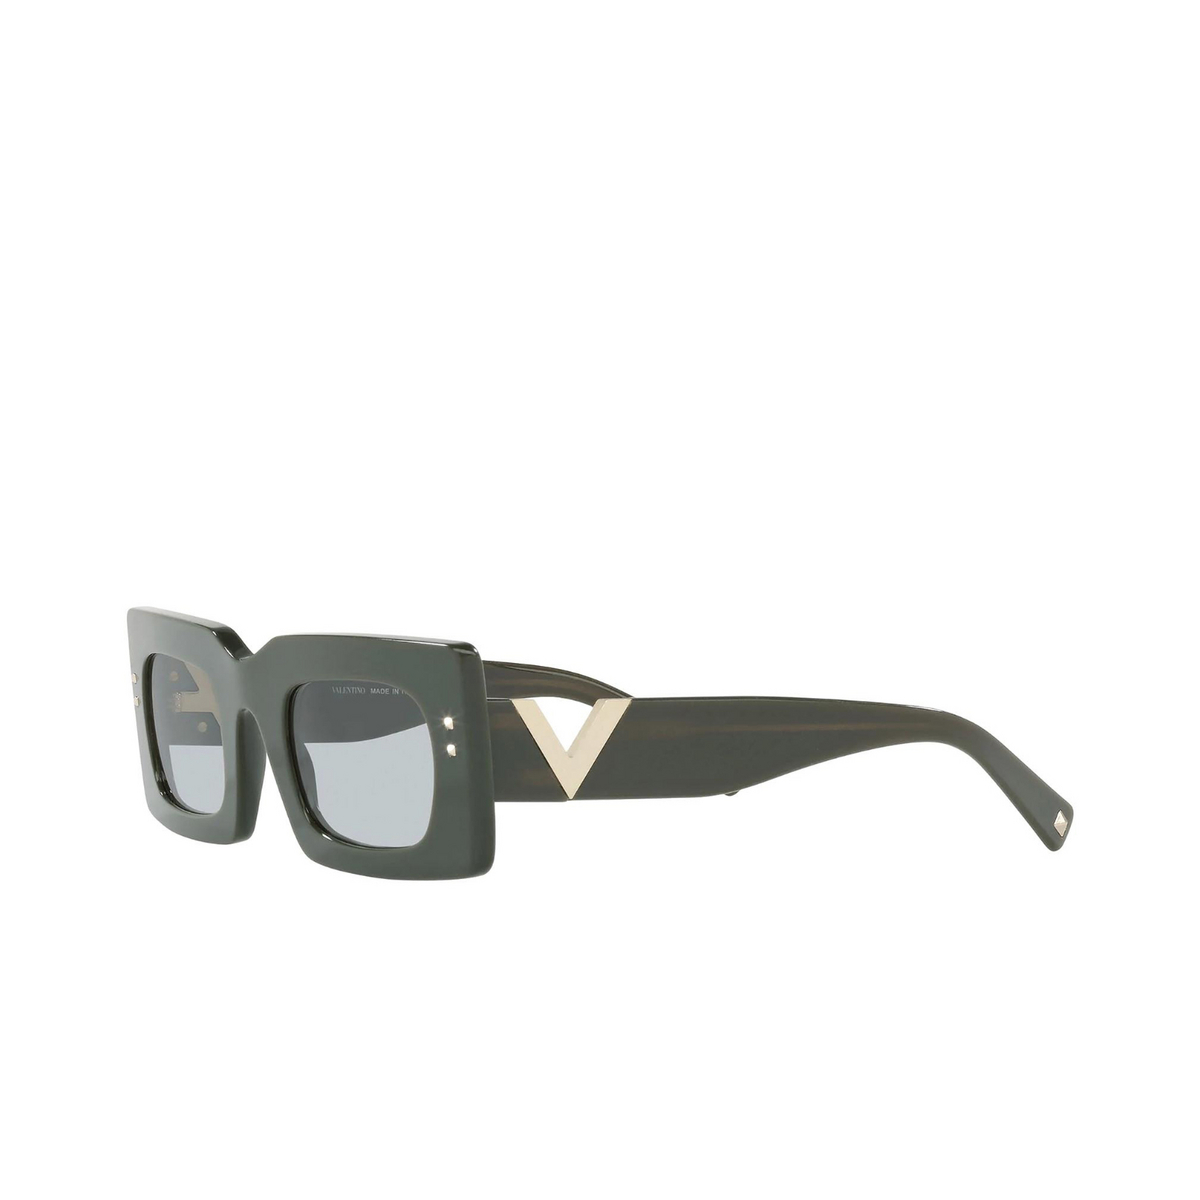 Valentino® Rectangle Sunglasses: VA4094 color Green 517687 - three-quarters view.